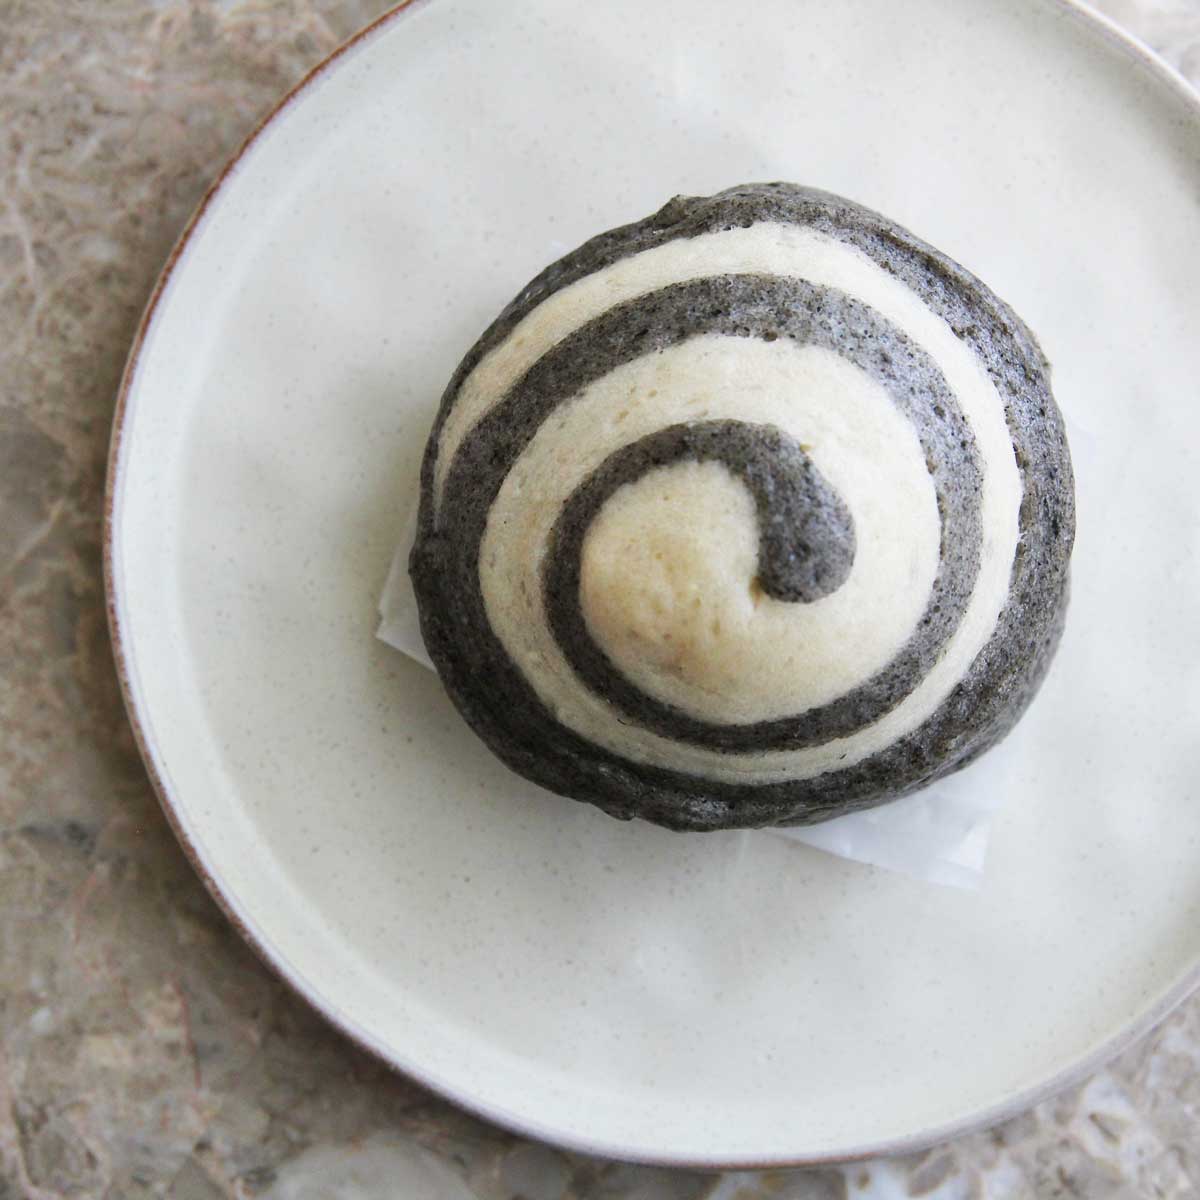 Homemade Black Sesame & Almond Milk Spiral Mantou (Vegan Steamed Buns Recipe) - Lemon Snow Skin Mooncakes